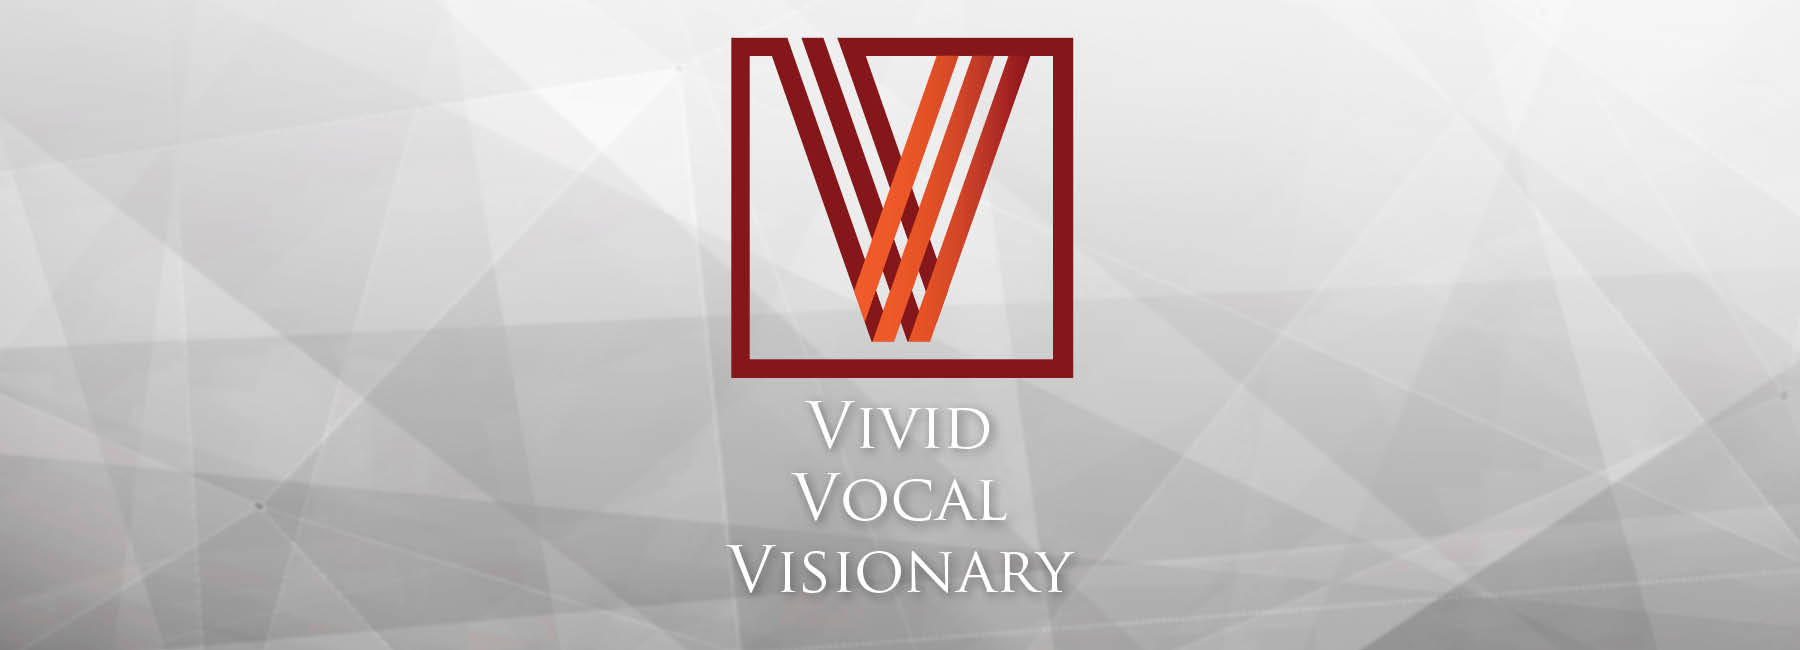 Vivid, Vocal, Visionary Header